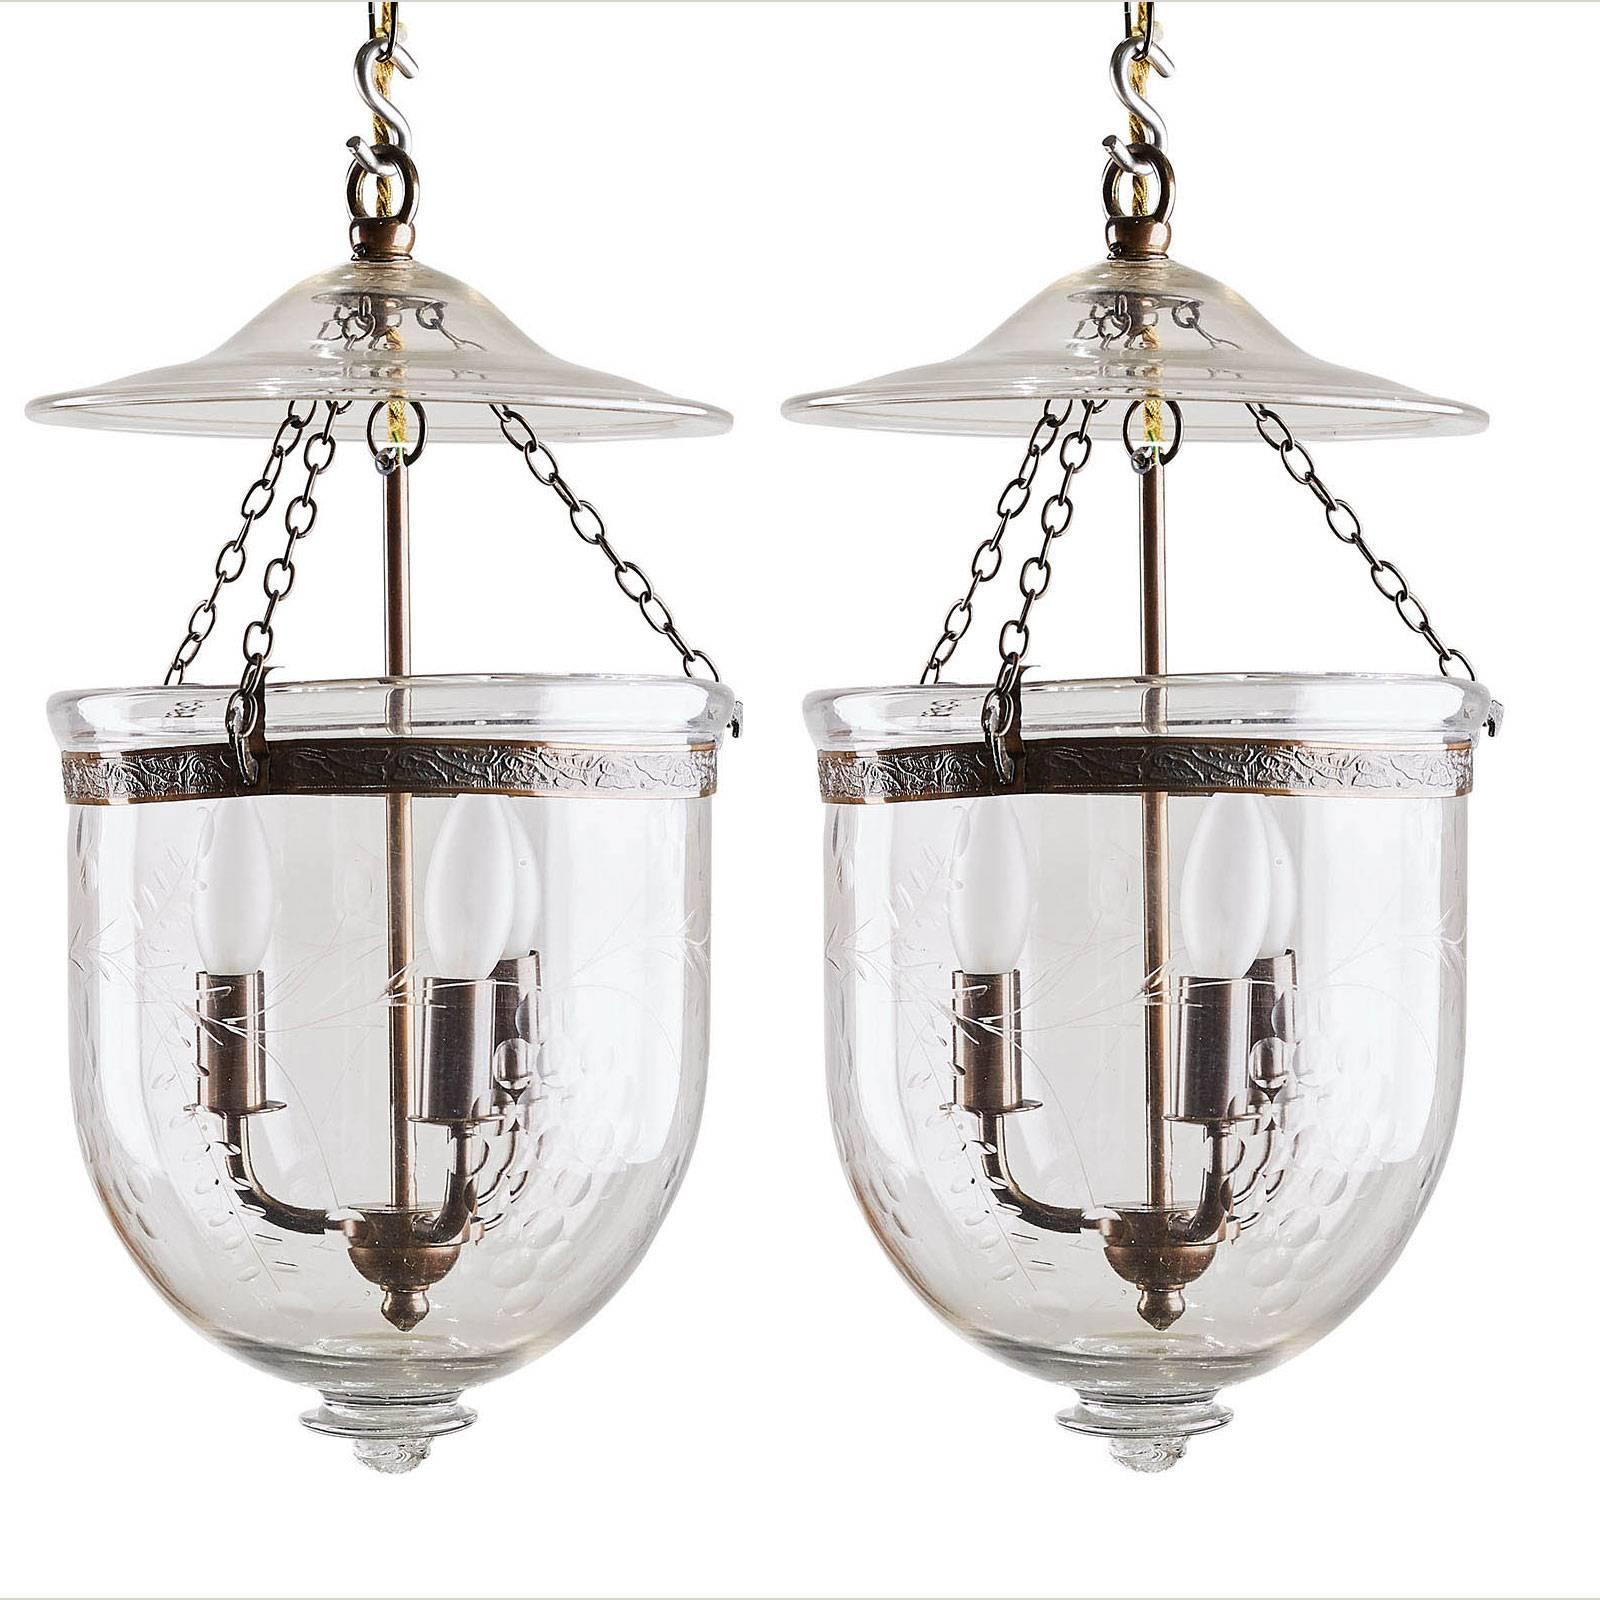 Two Similar Bell Jar Lantern with Grapes, circa 1900